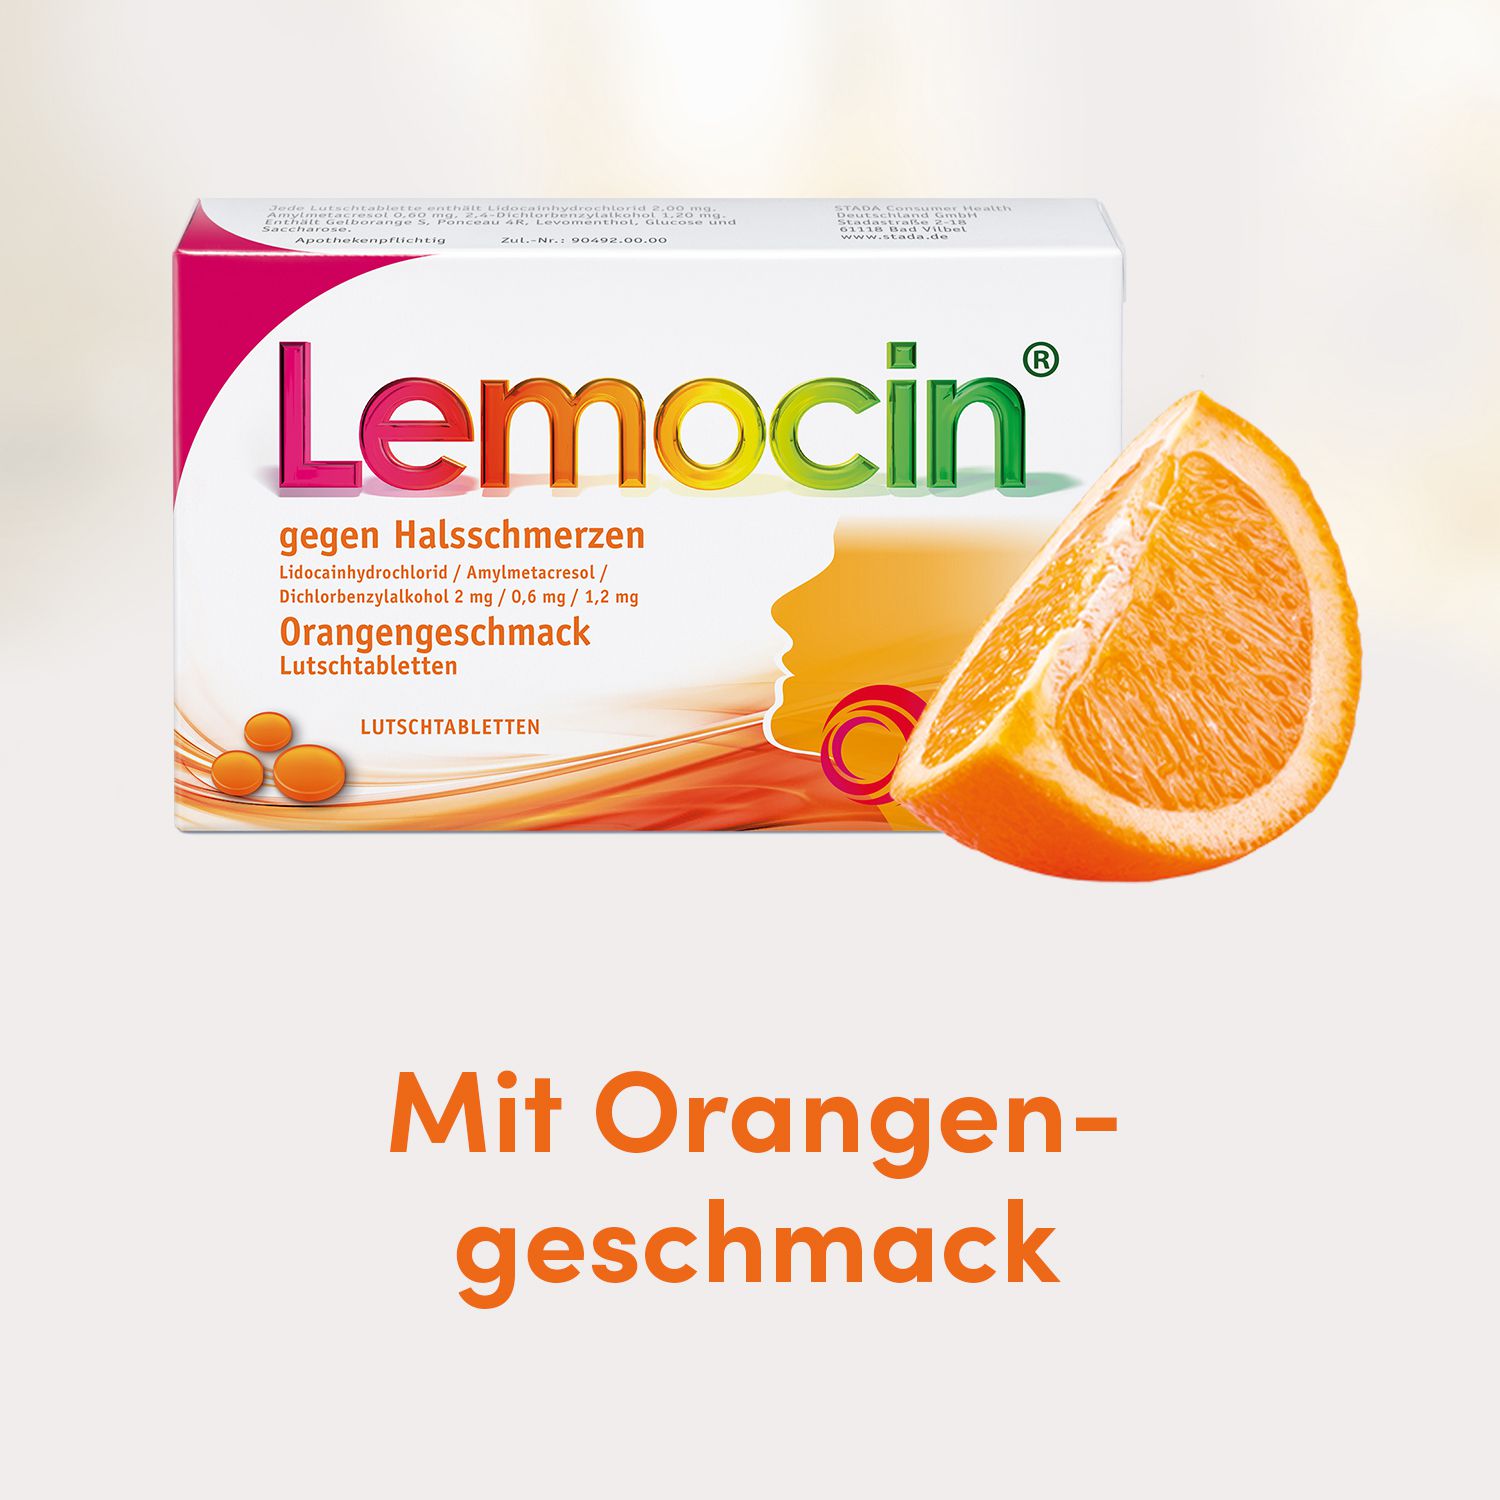 LEMOCIN gegen Halsschmerzen Orangengeschmack Lut.